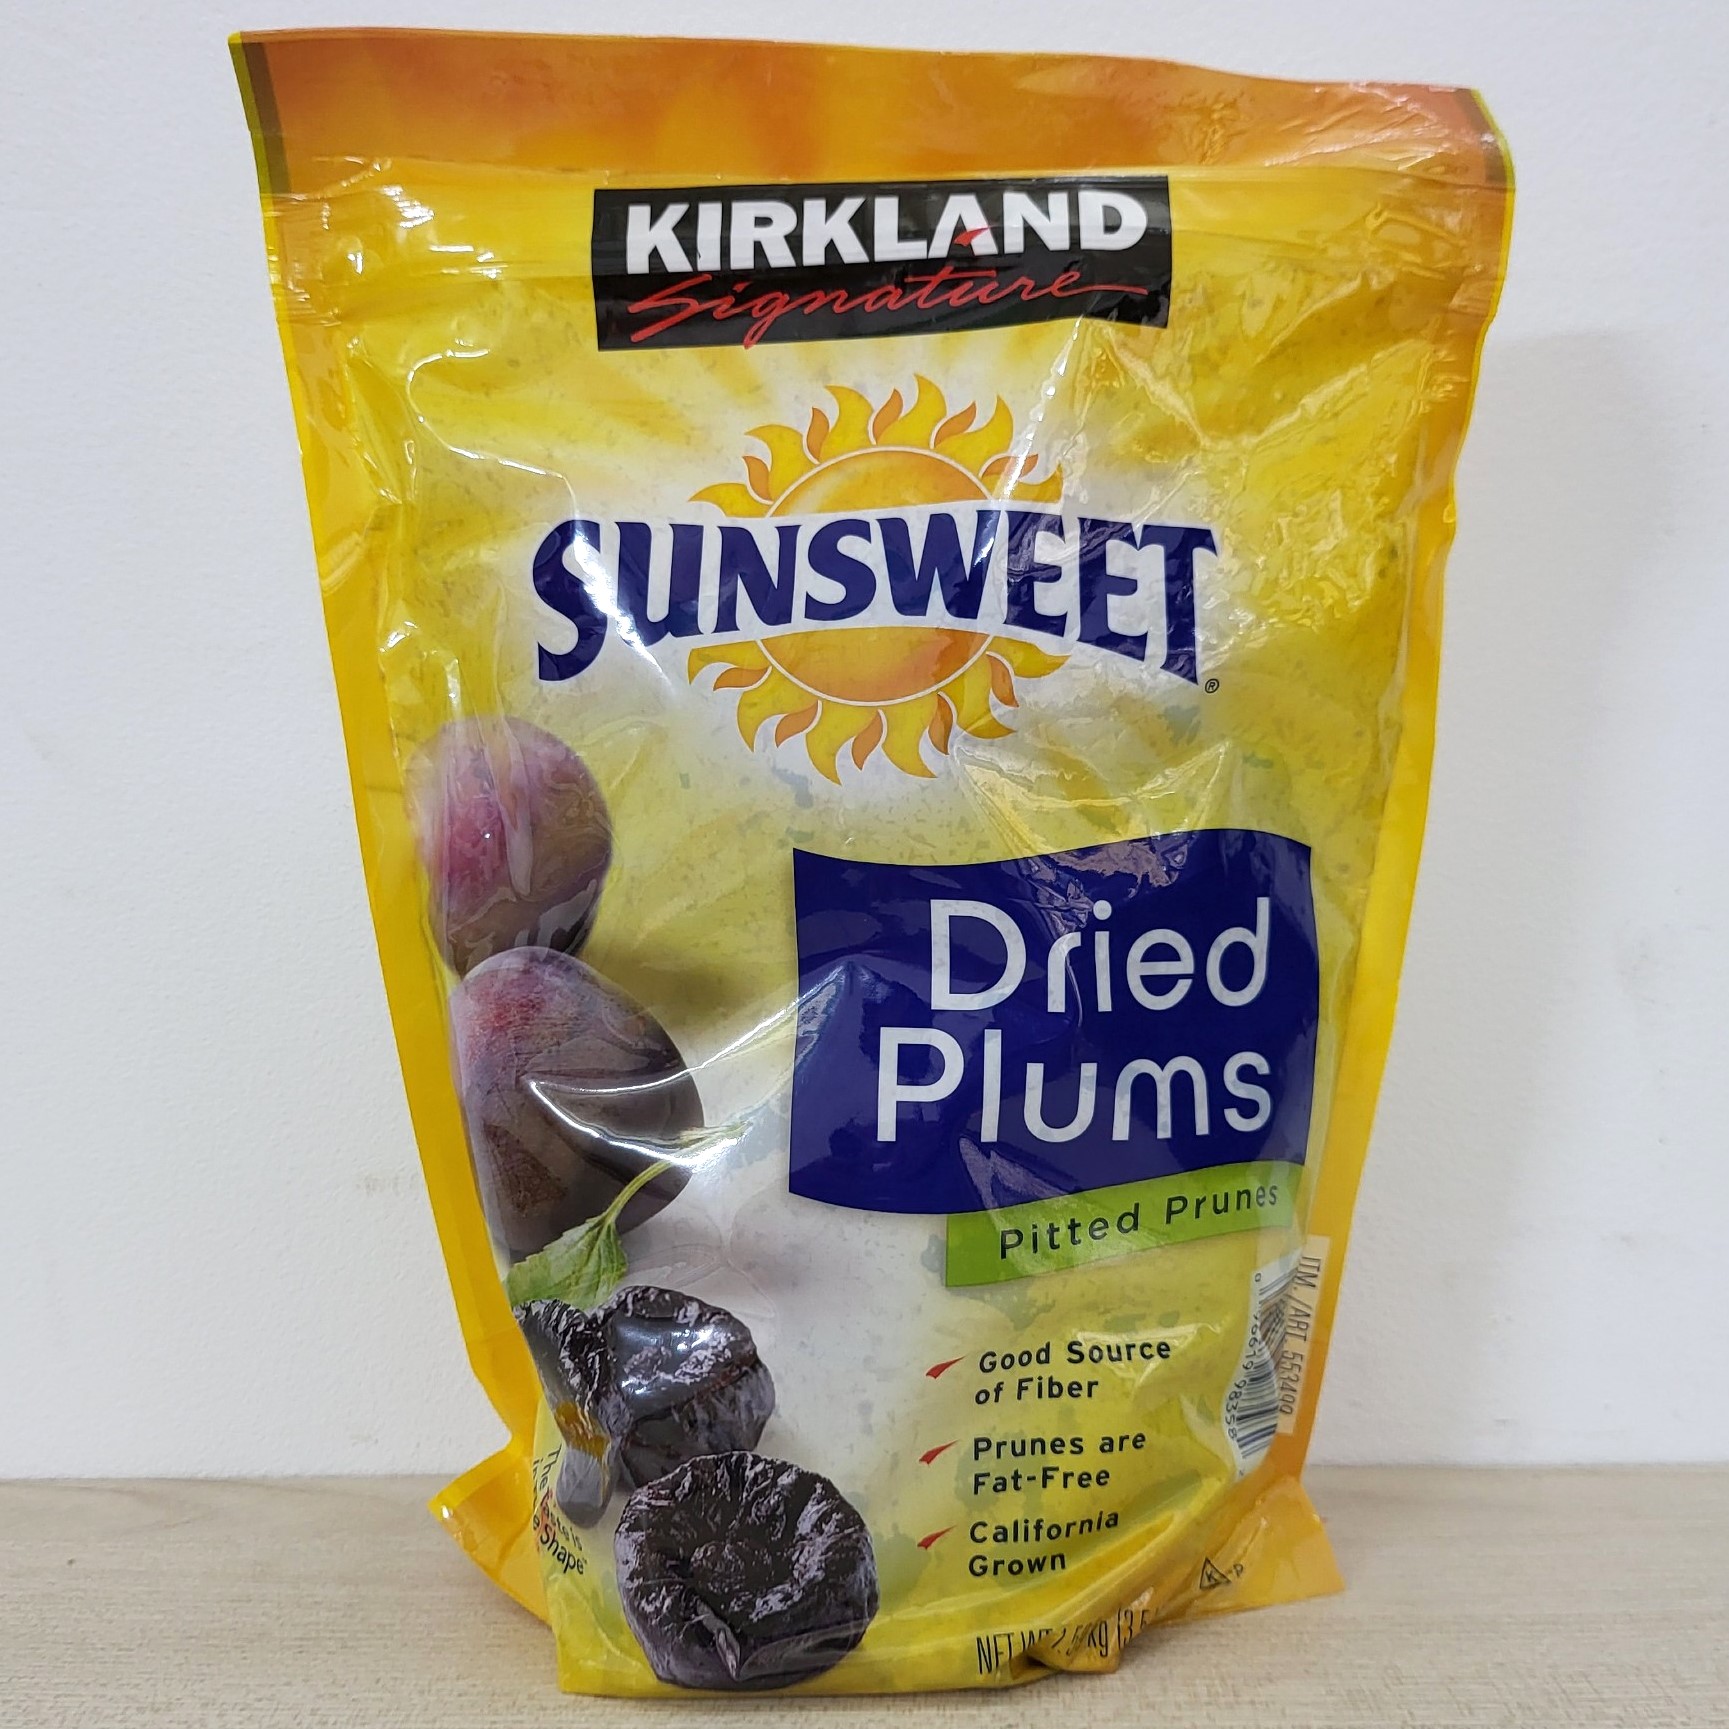 KIRKLAND Túi 1.59 Kg MẬN SẤY KHÔ SUNSWEET Dried Plums Pitted Prunes